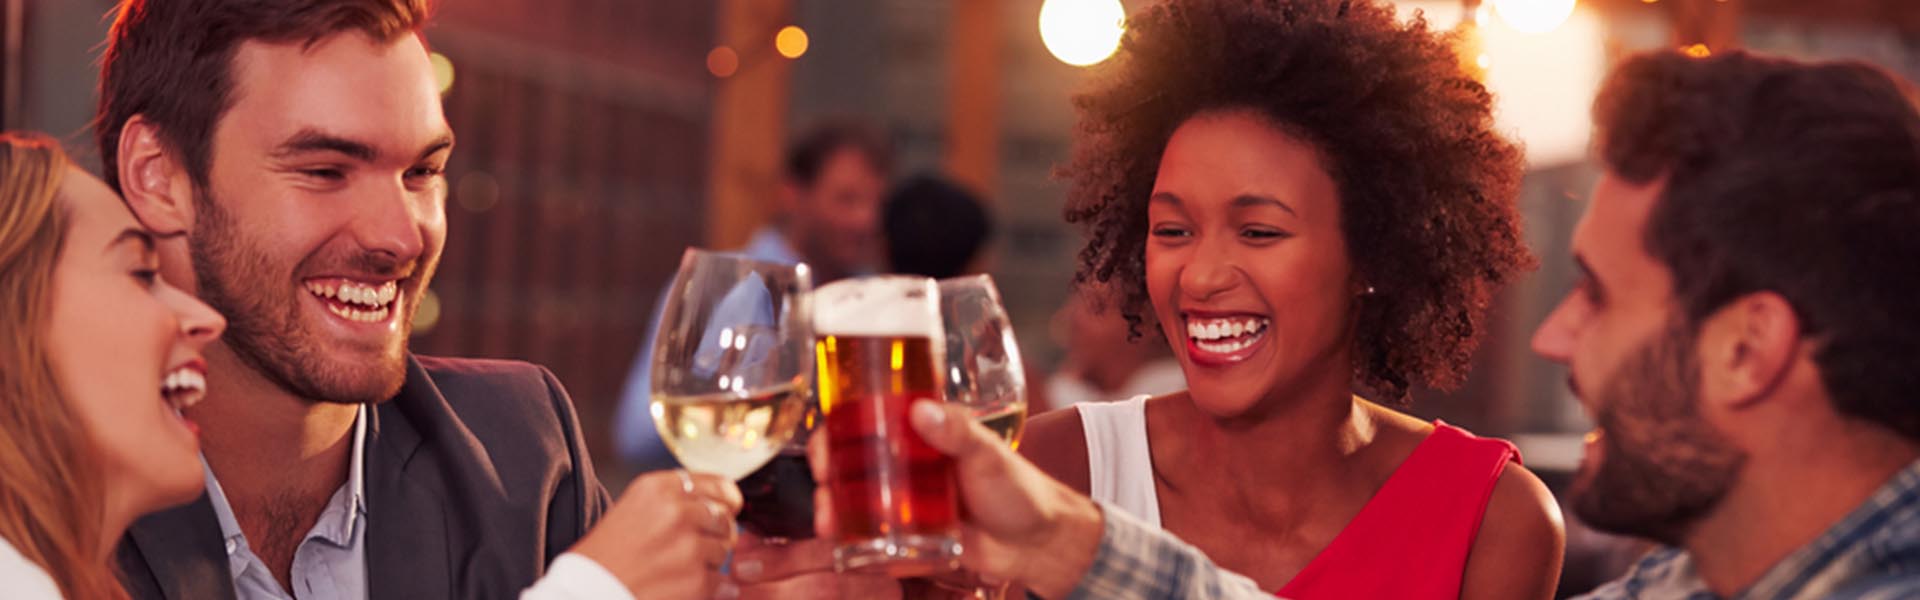 Bebida alcoólica é consumida por 48% dos brasileiros